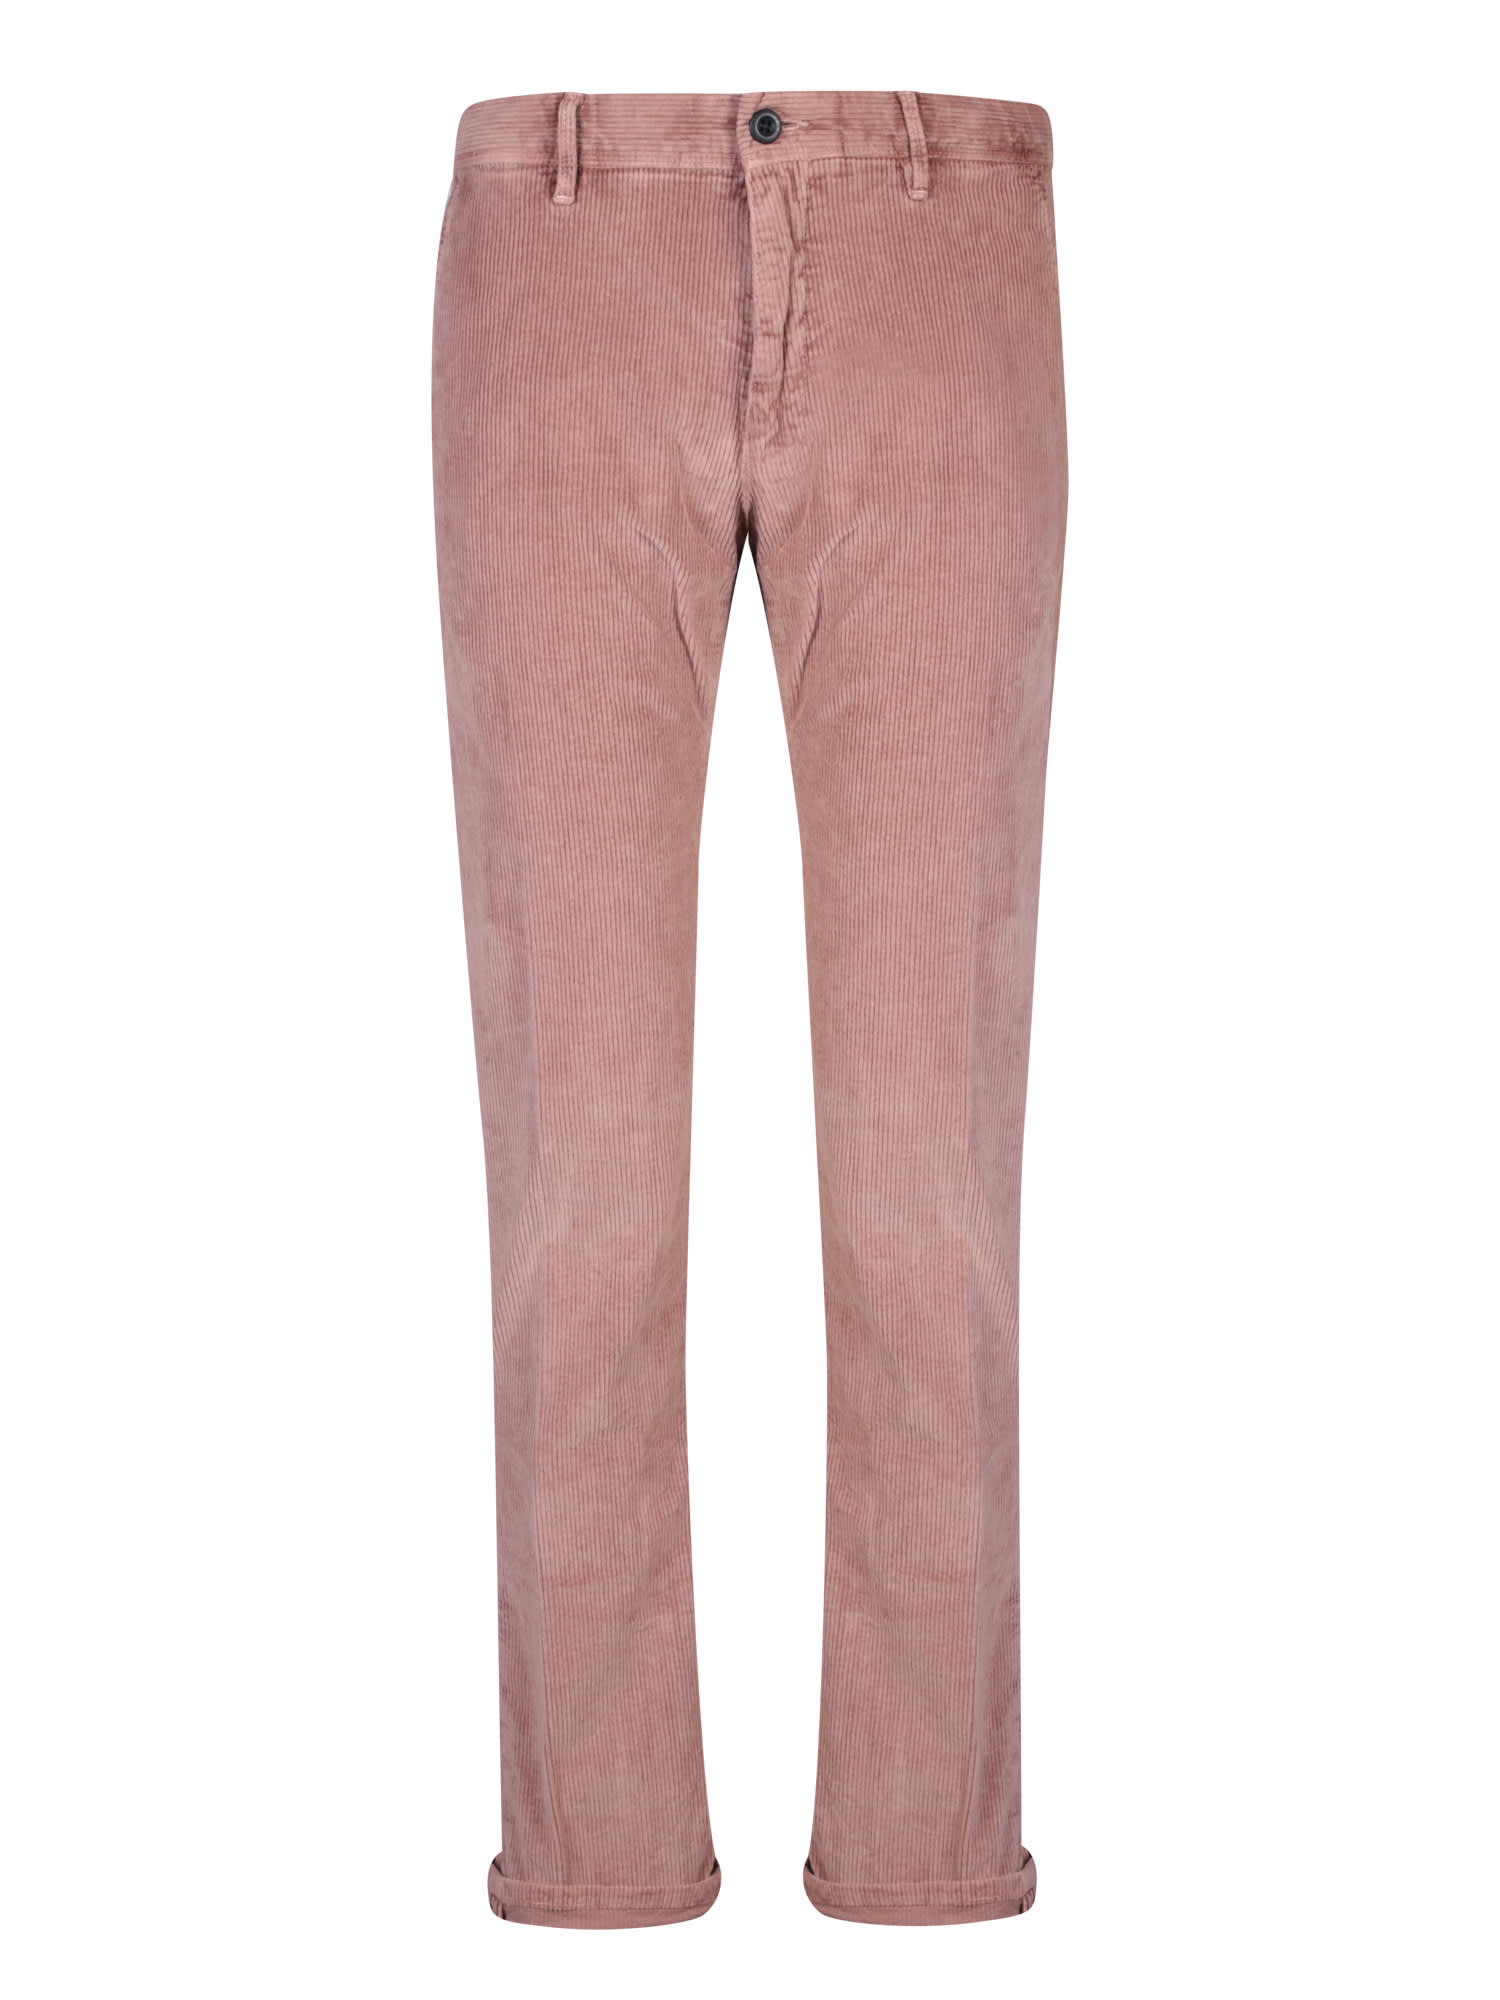 Shop Incotex Veltev Pink Trousers